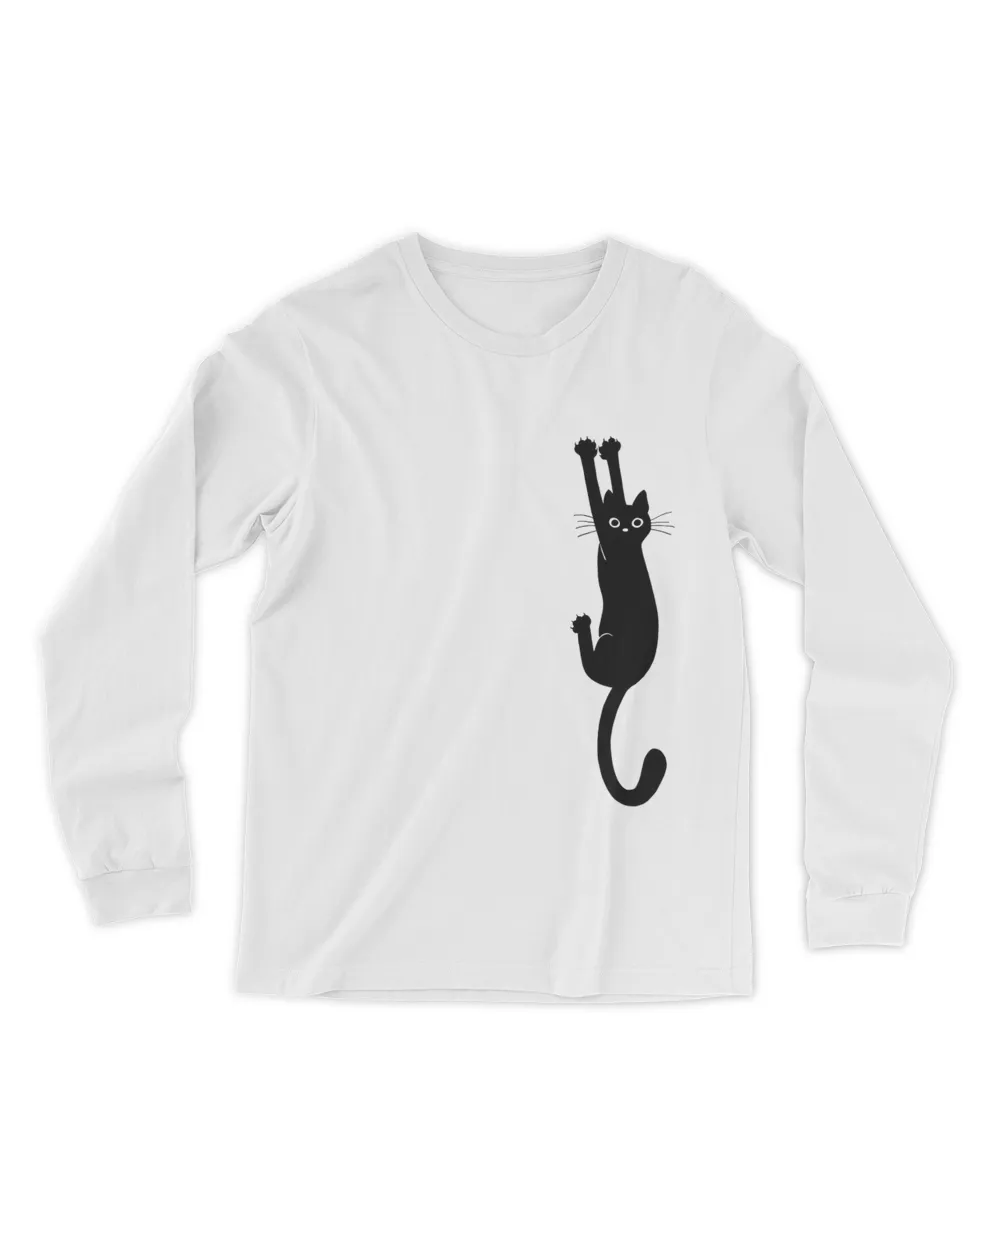 Black Cat Holding On Shirt